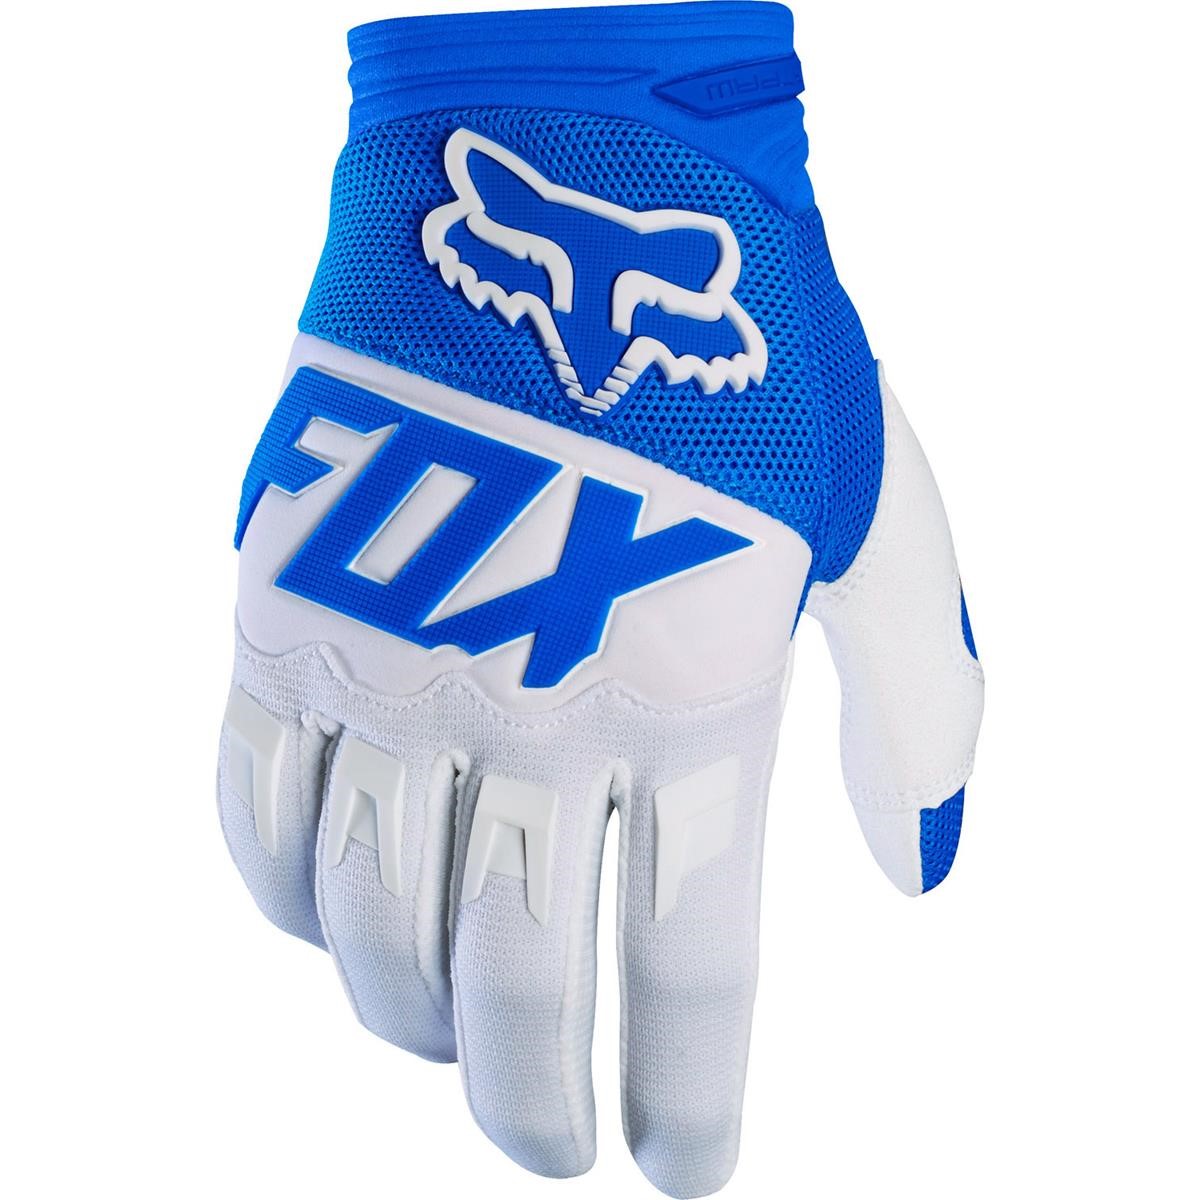 Fox Handschuhe Dirtpaw Race Blau